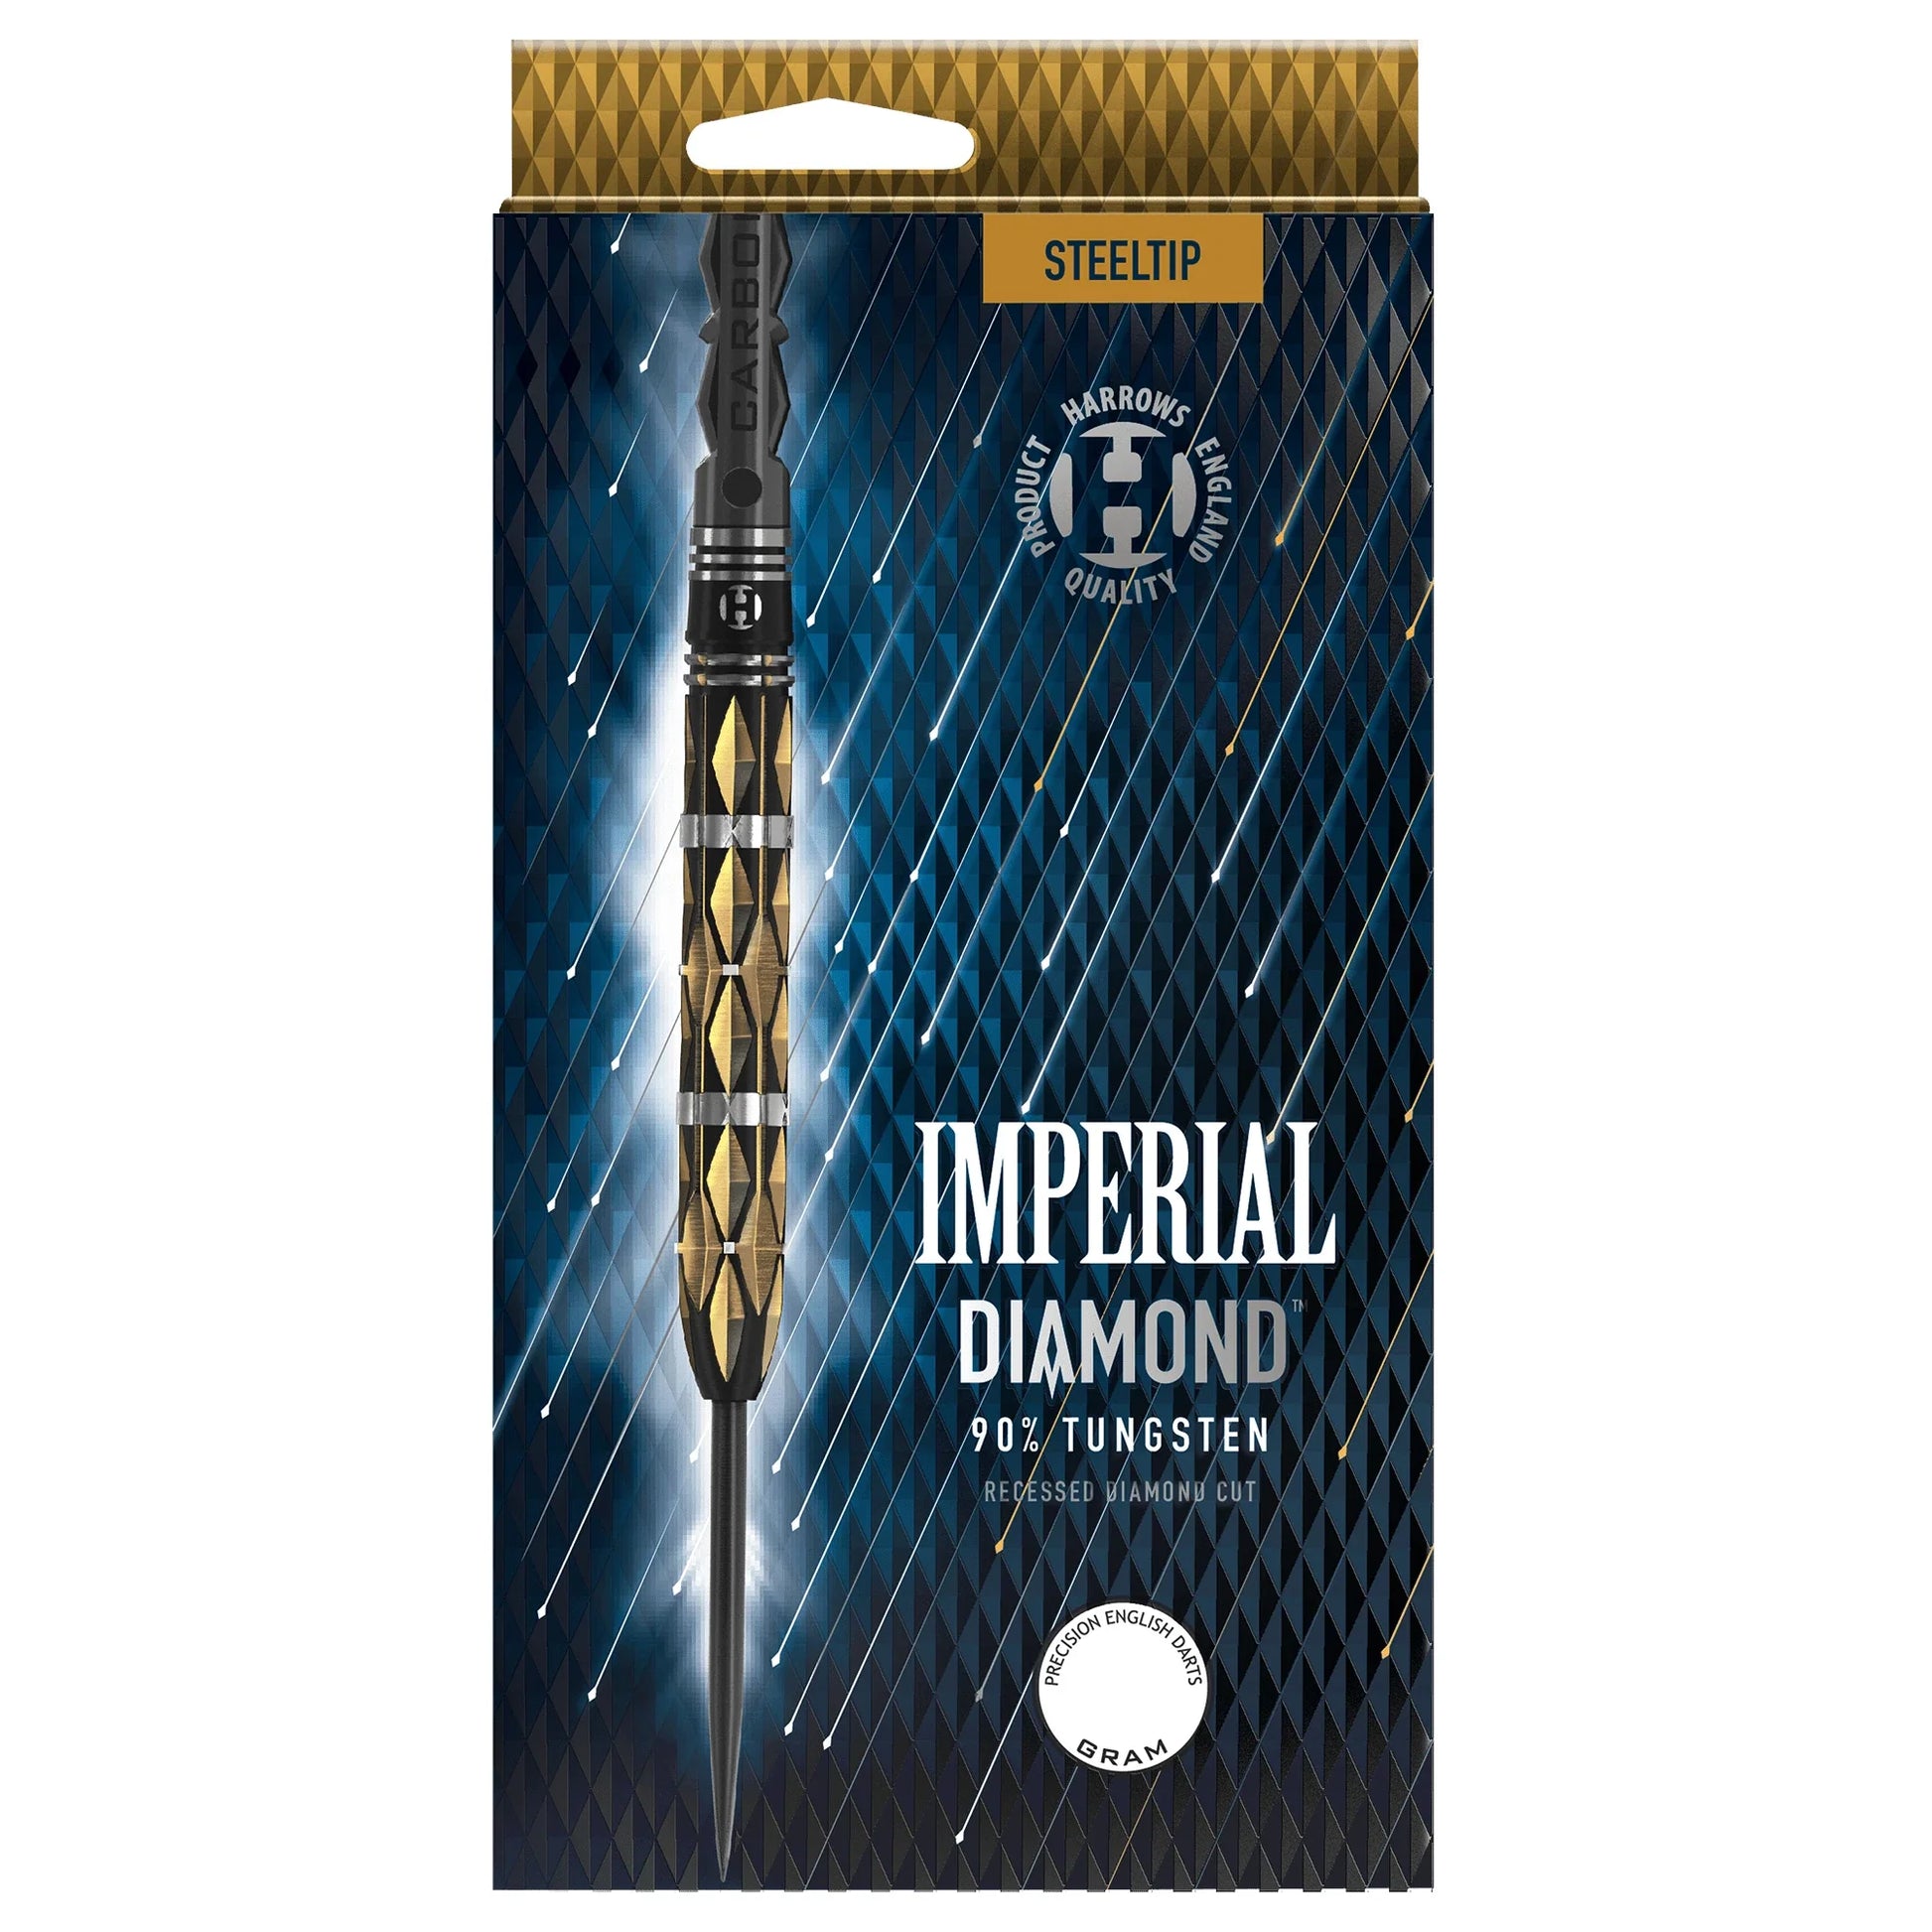 Harrows Imperial Diamond 25g Darts